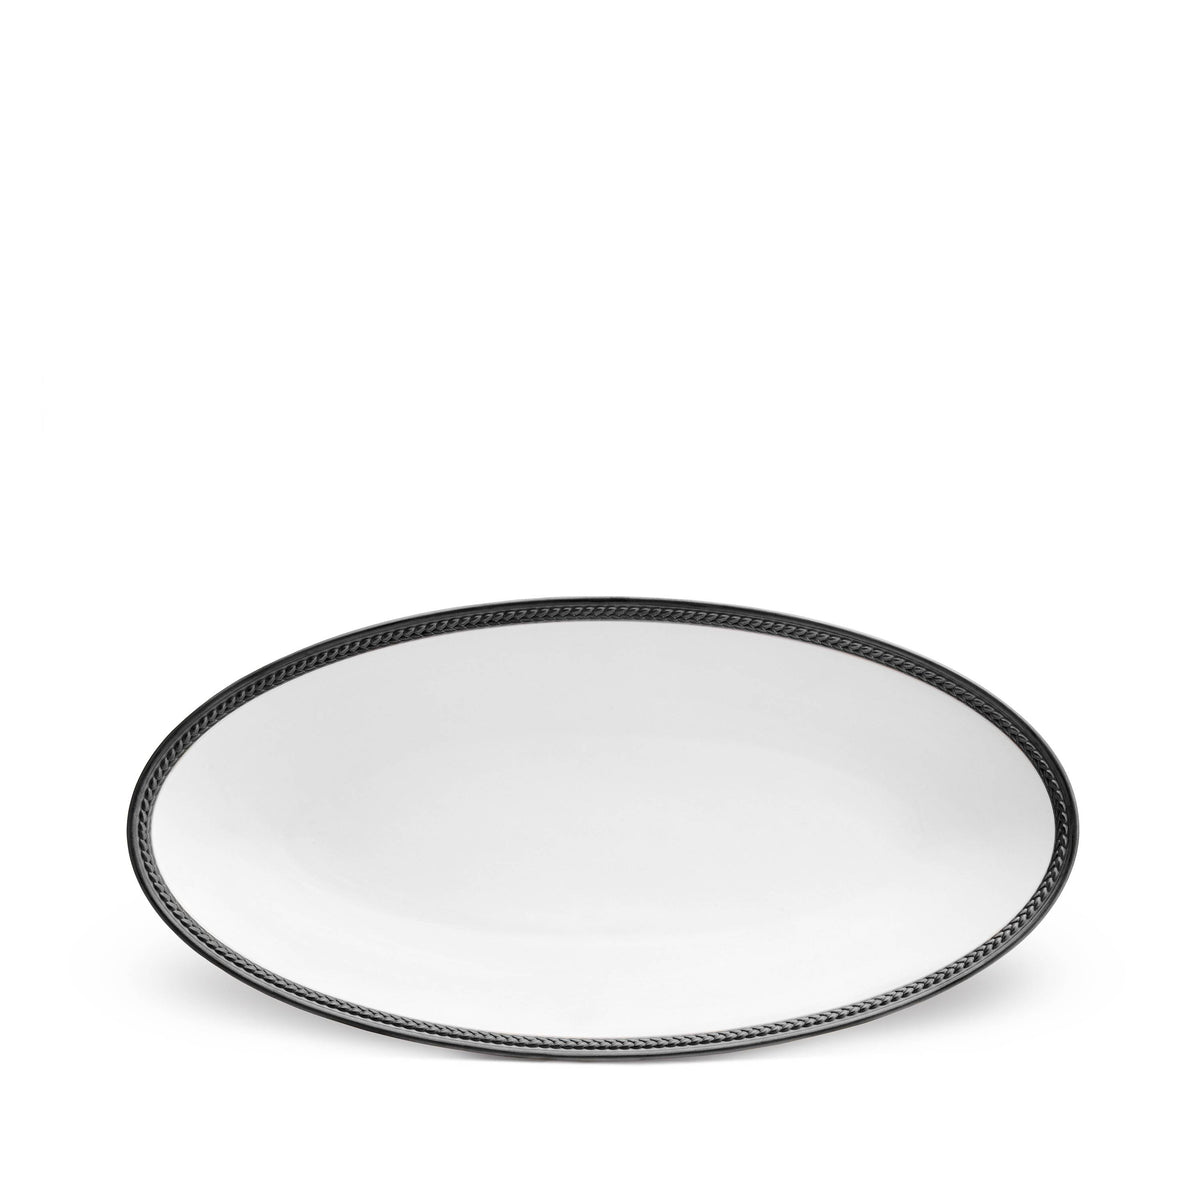 Soie Tressée Oval Platter Small Black